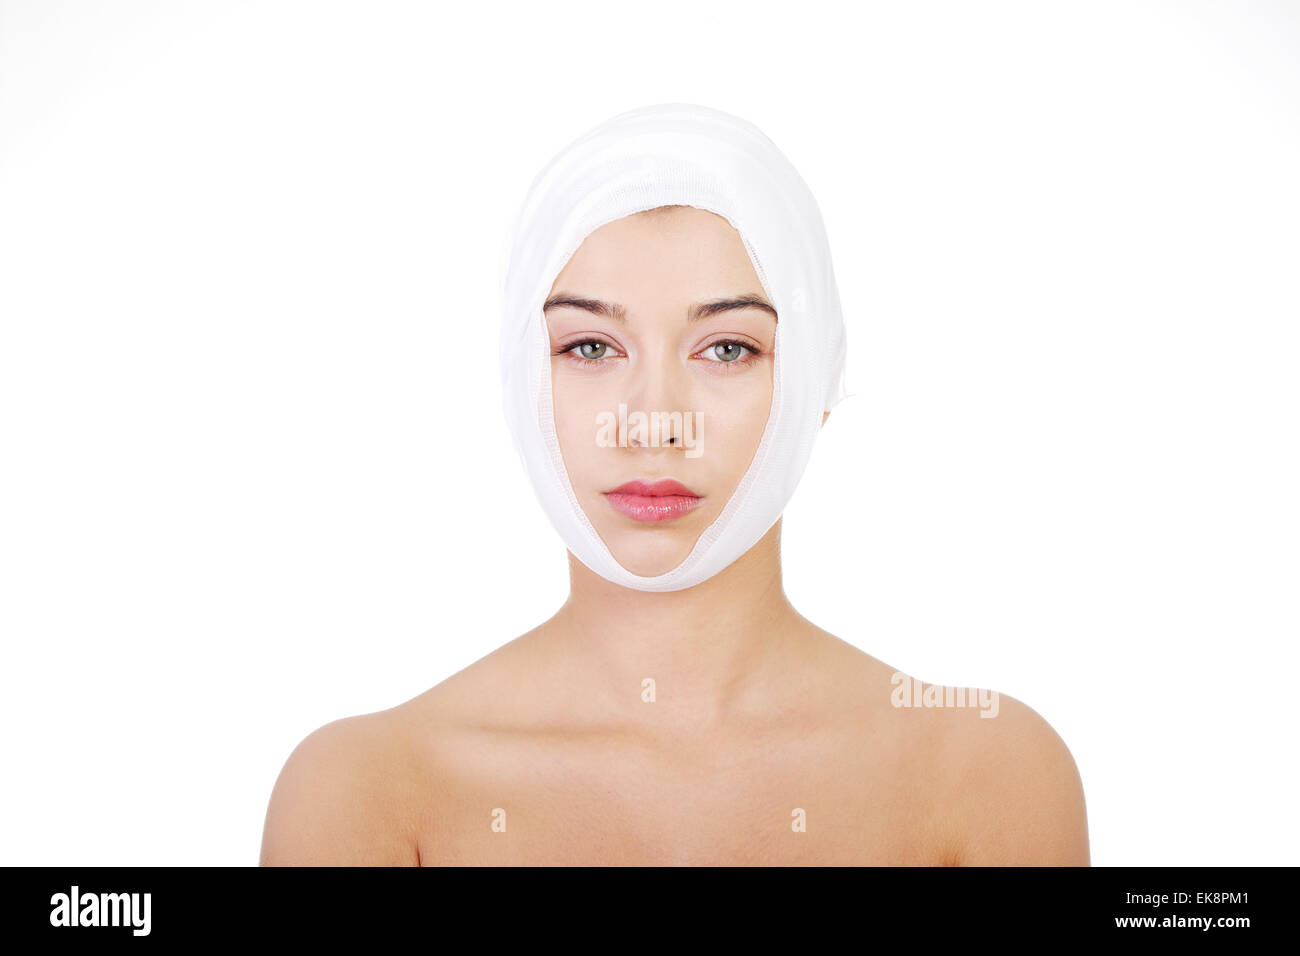 Beauty treatment plastic surgery concept Stock Photo